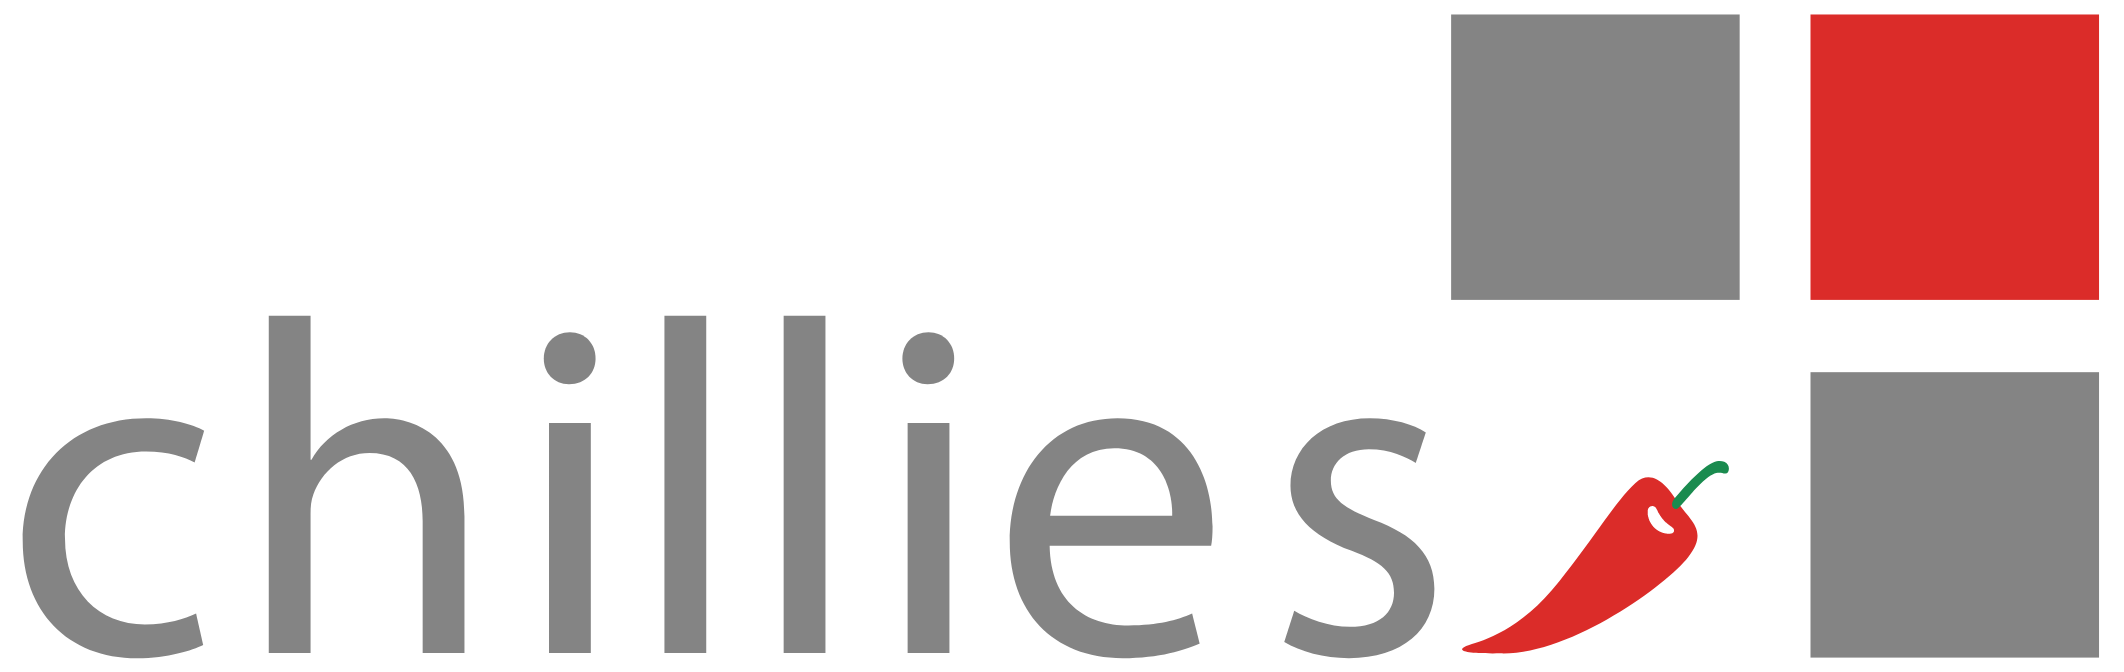 Chillies Enterprises Logo